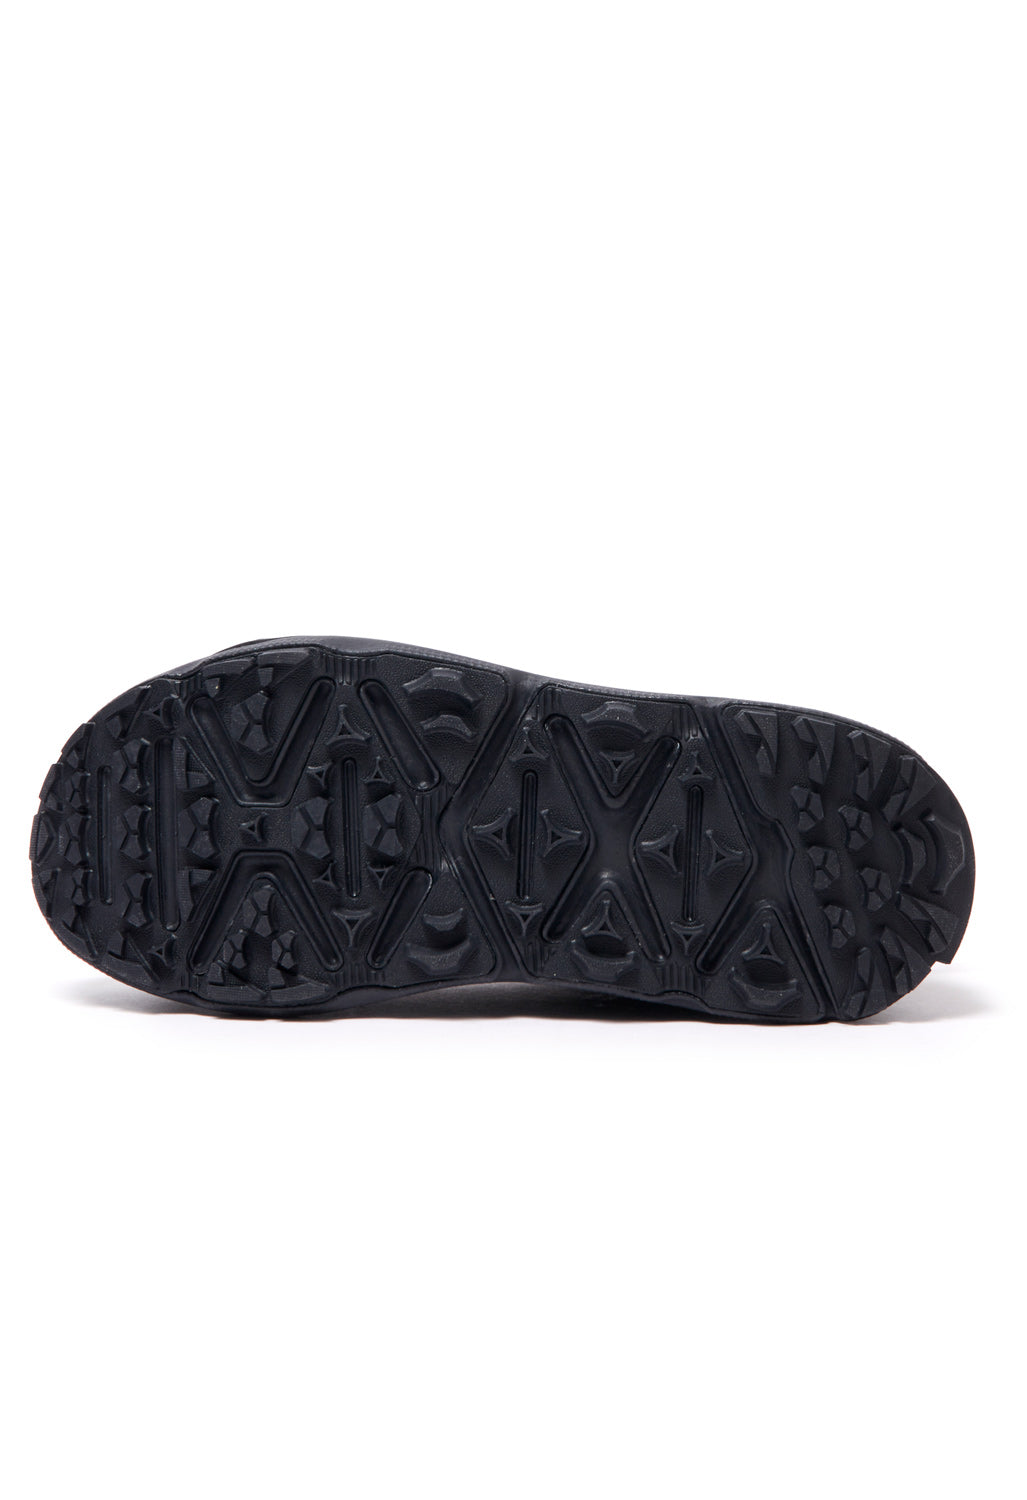 Hoka Mafate Origins Shoes - Black/Black